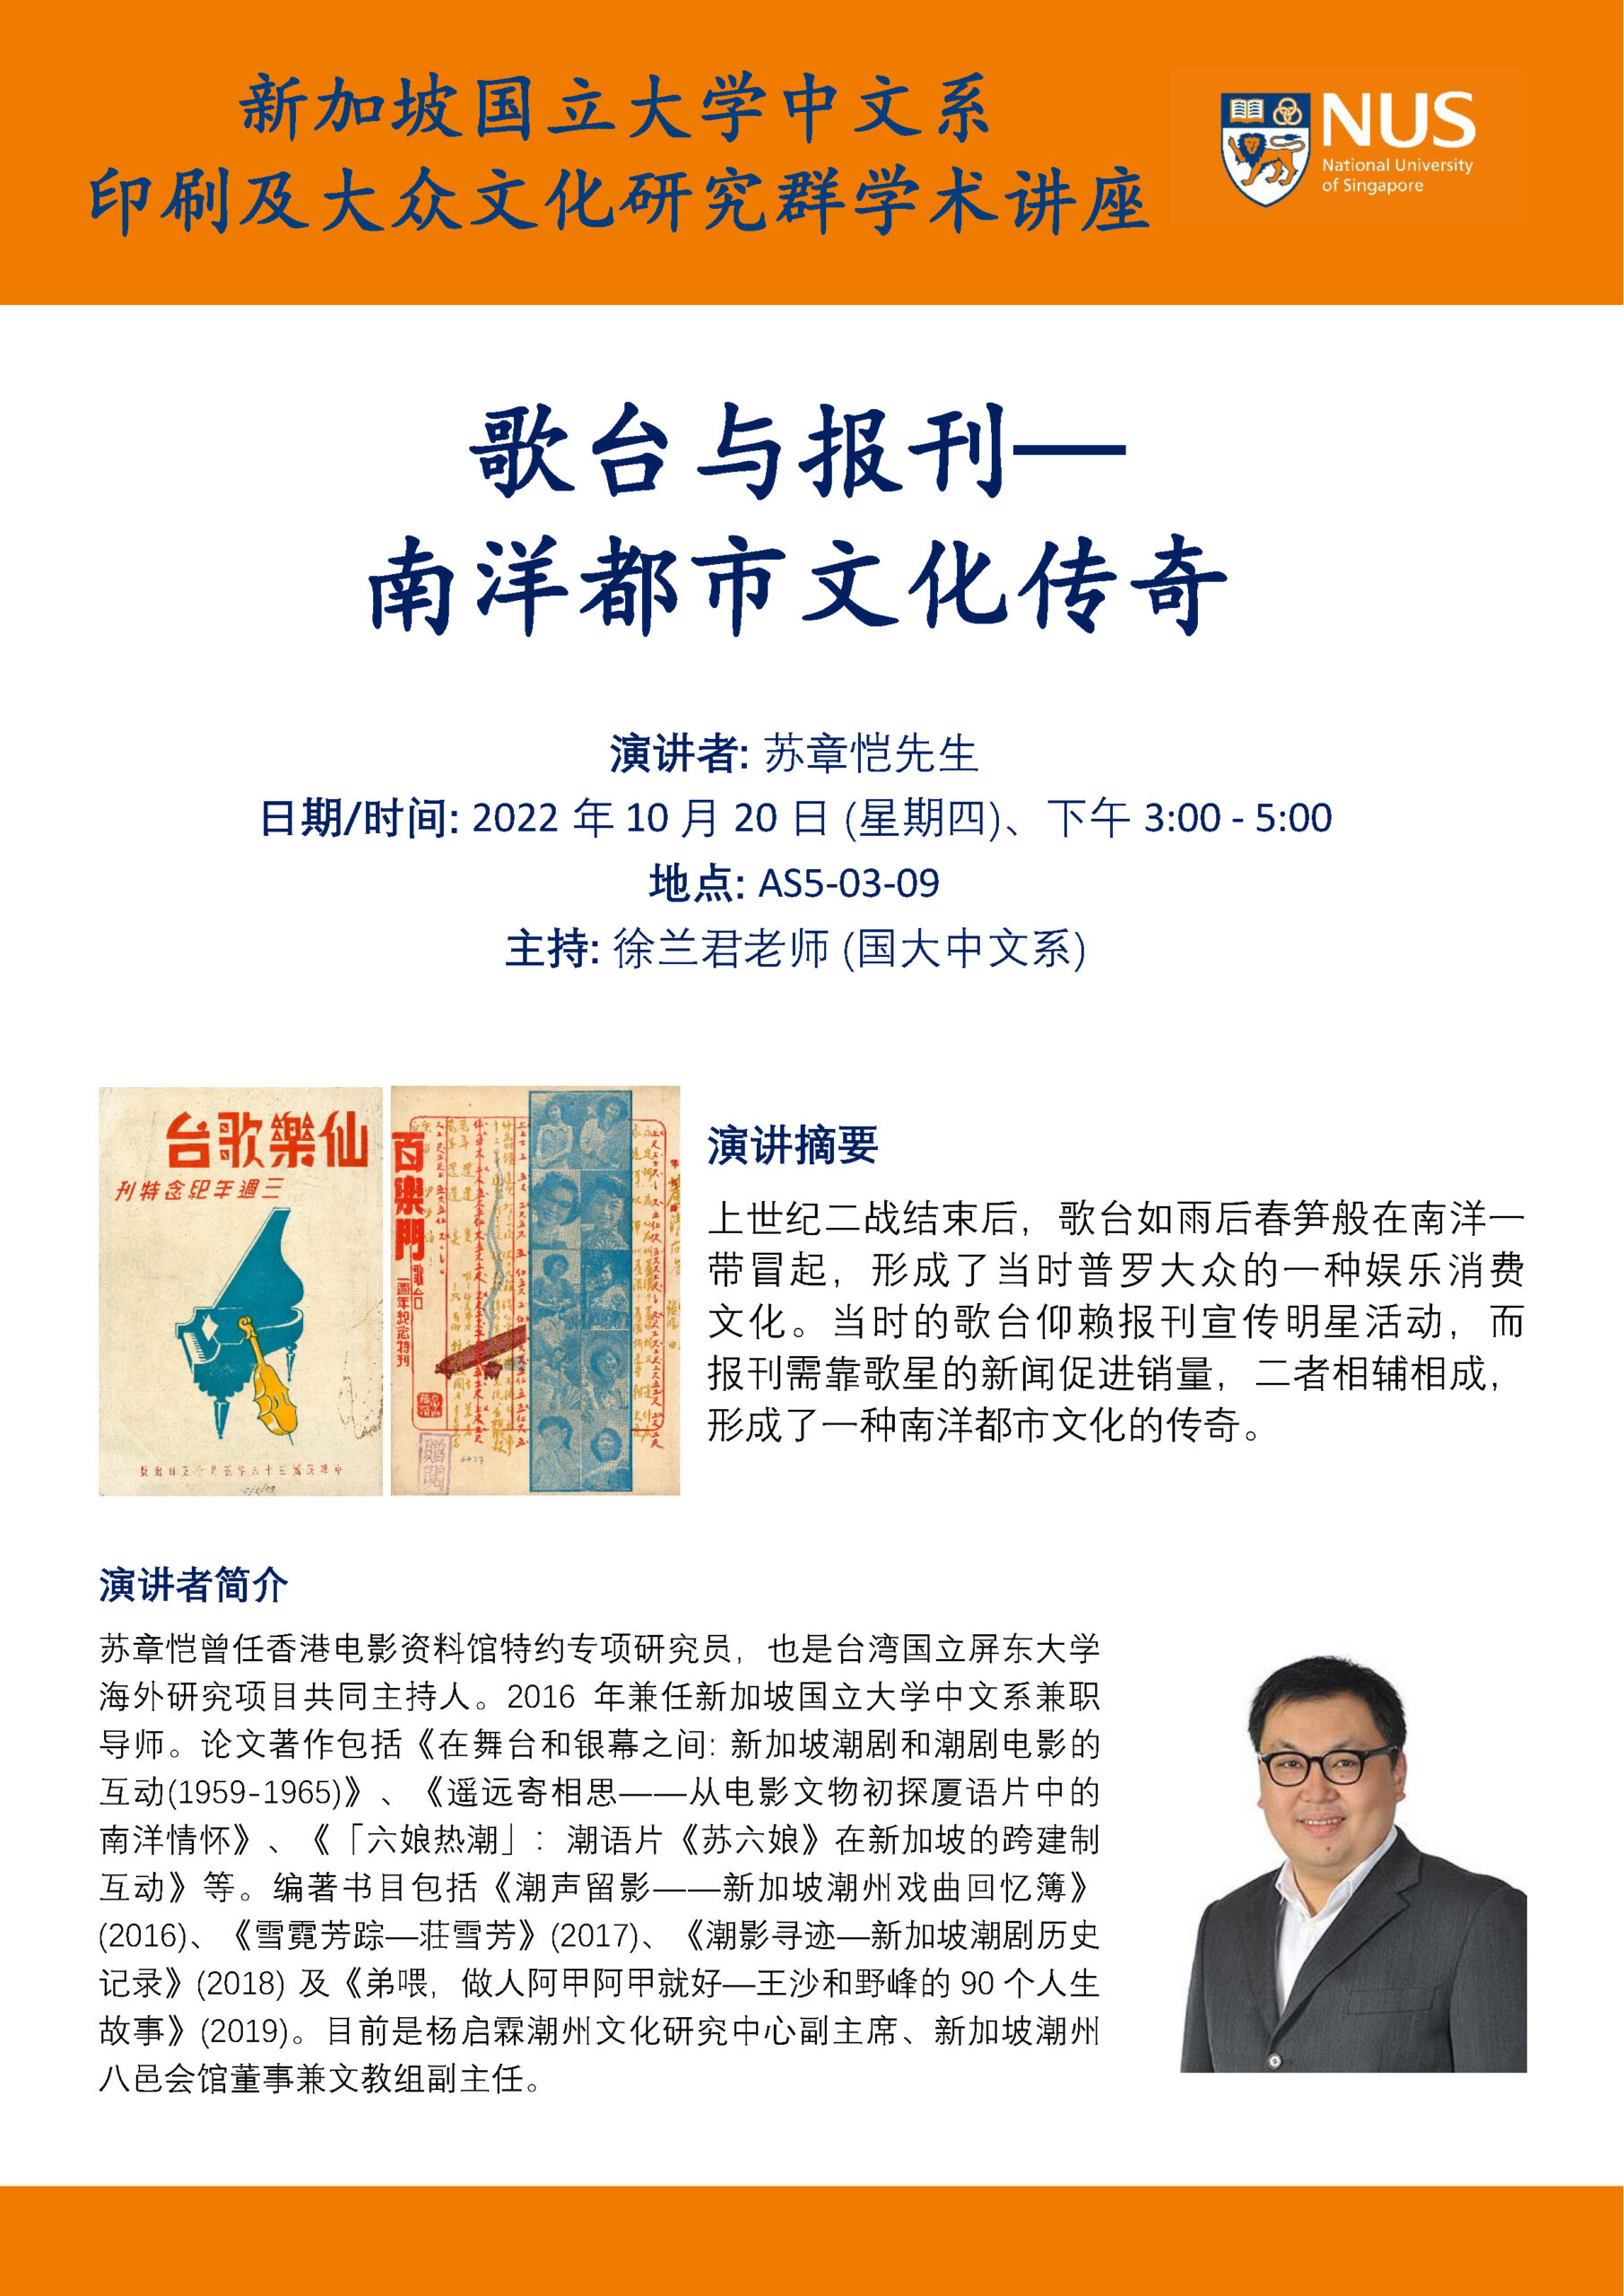 Su Zhangkai Seminar 20 October